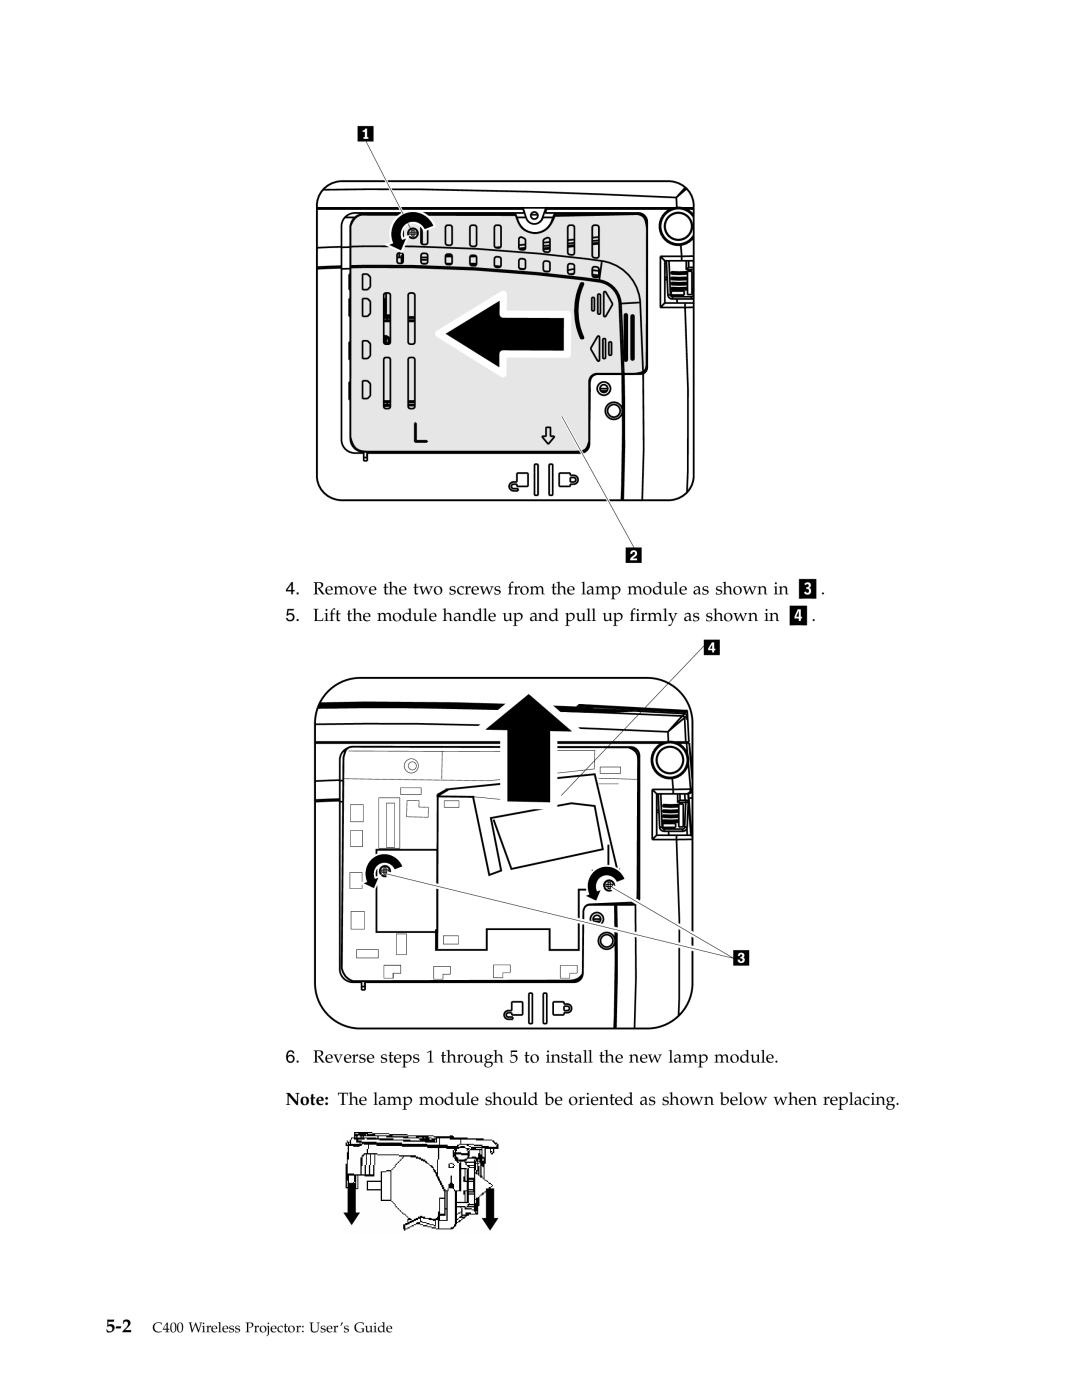 Lenovo manual 5-2 C400 Wireless Projector: User’s Guide 